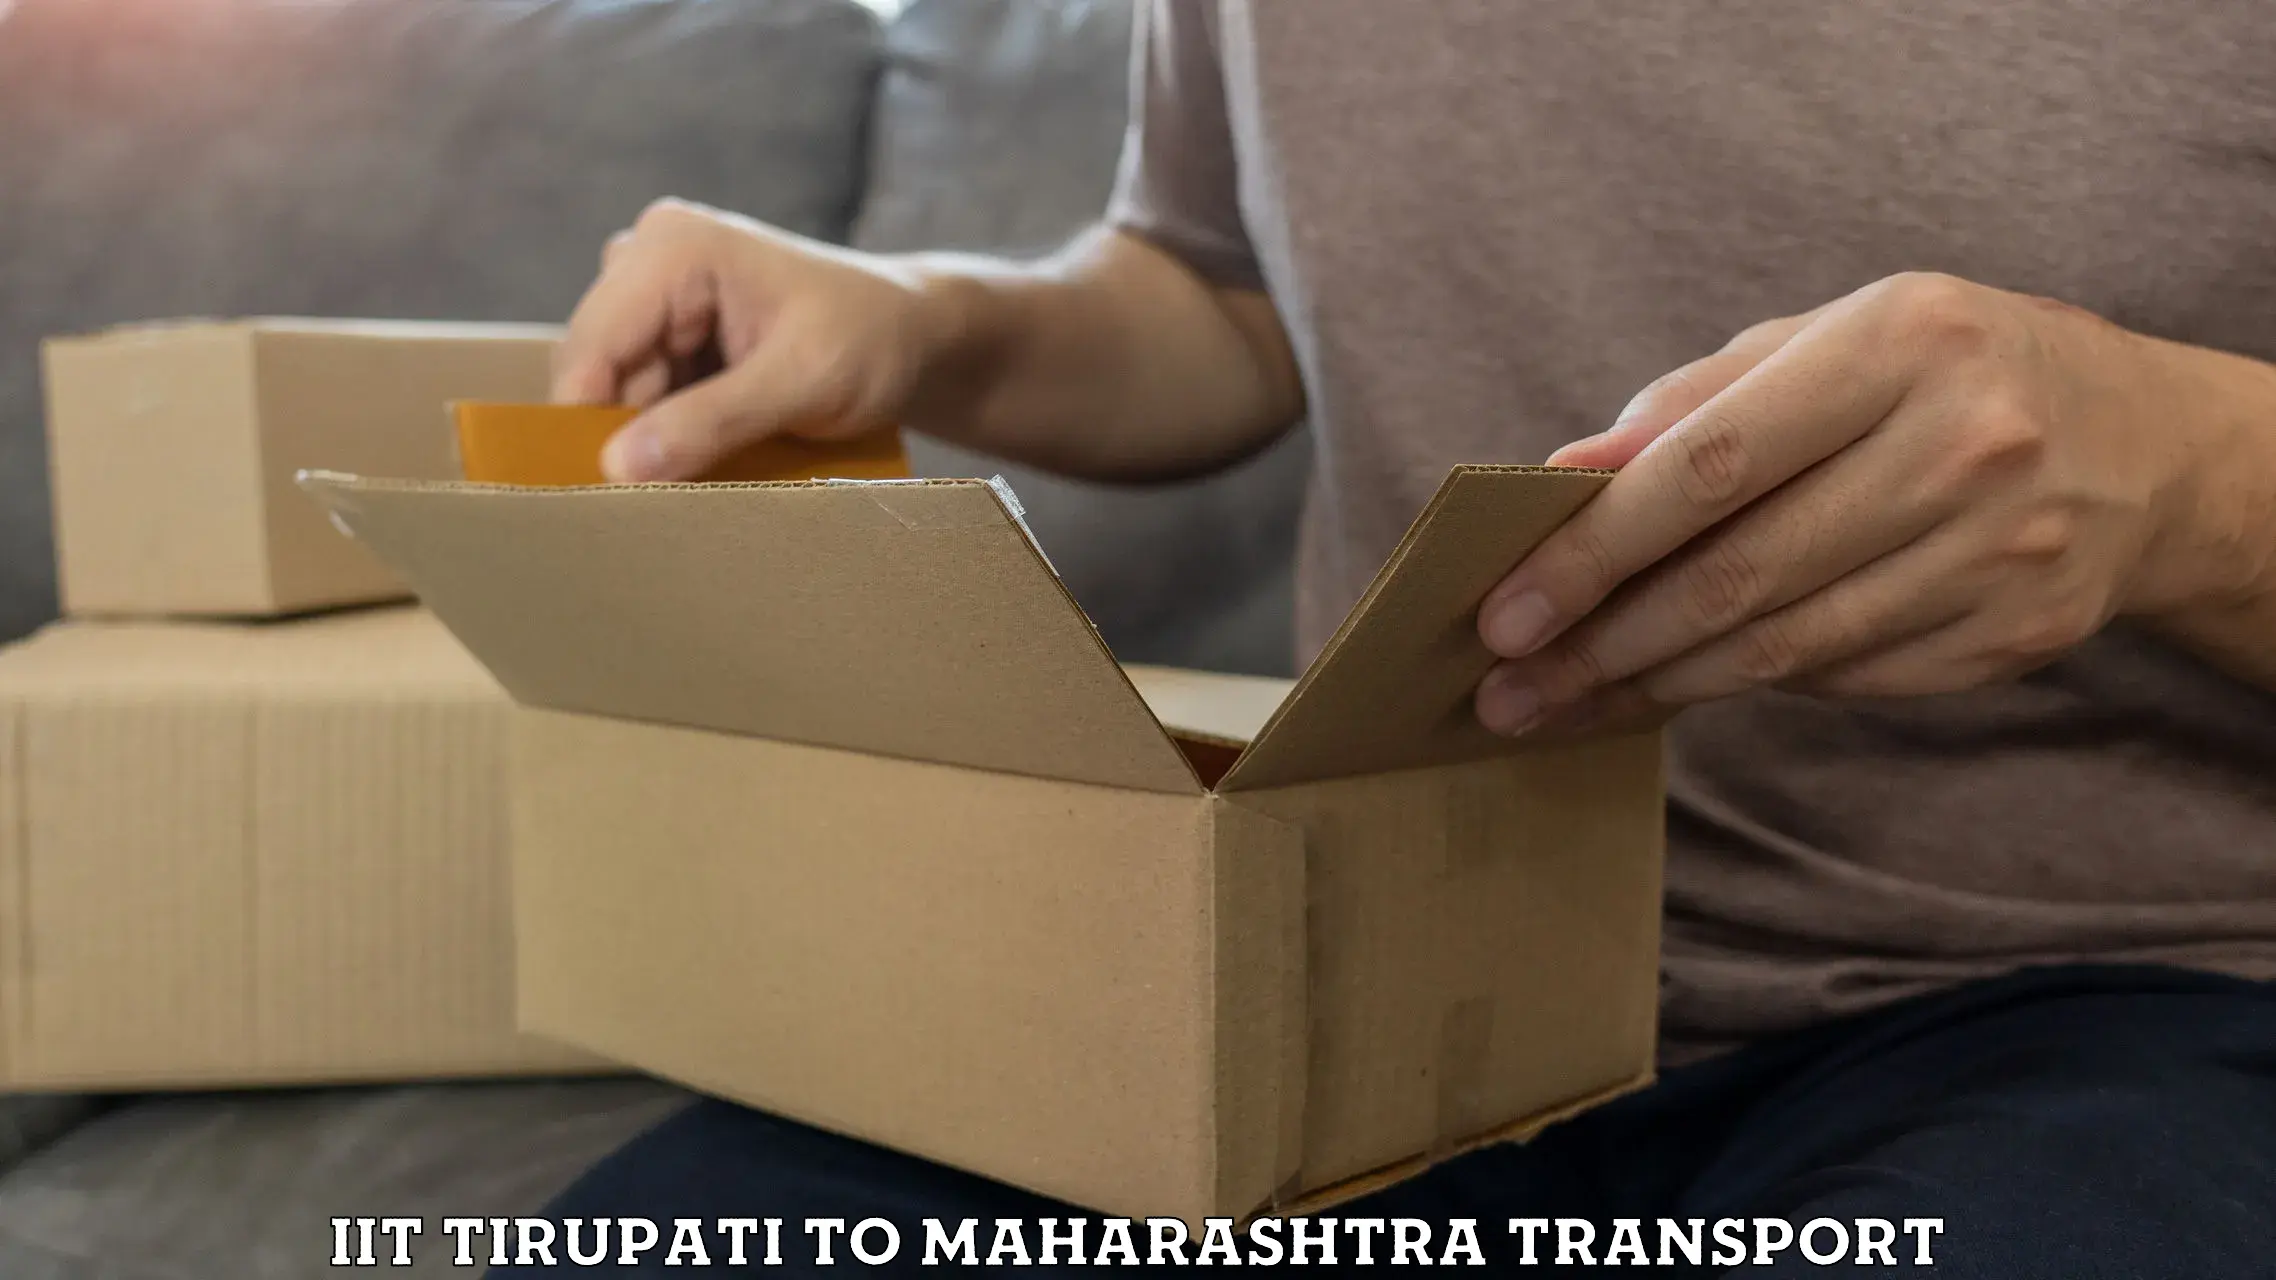 Bike transport service IIT Tirupati to Maharashtra